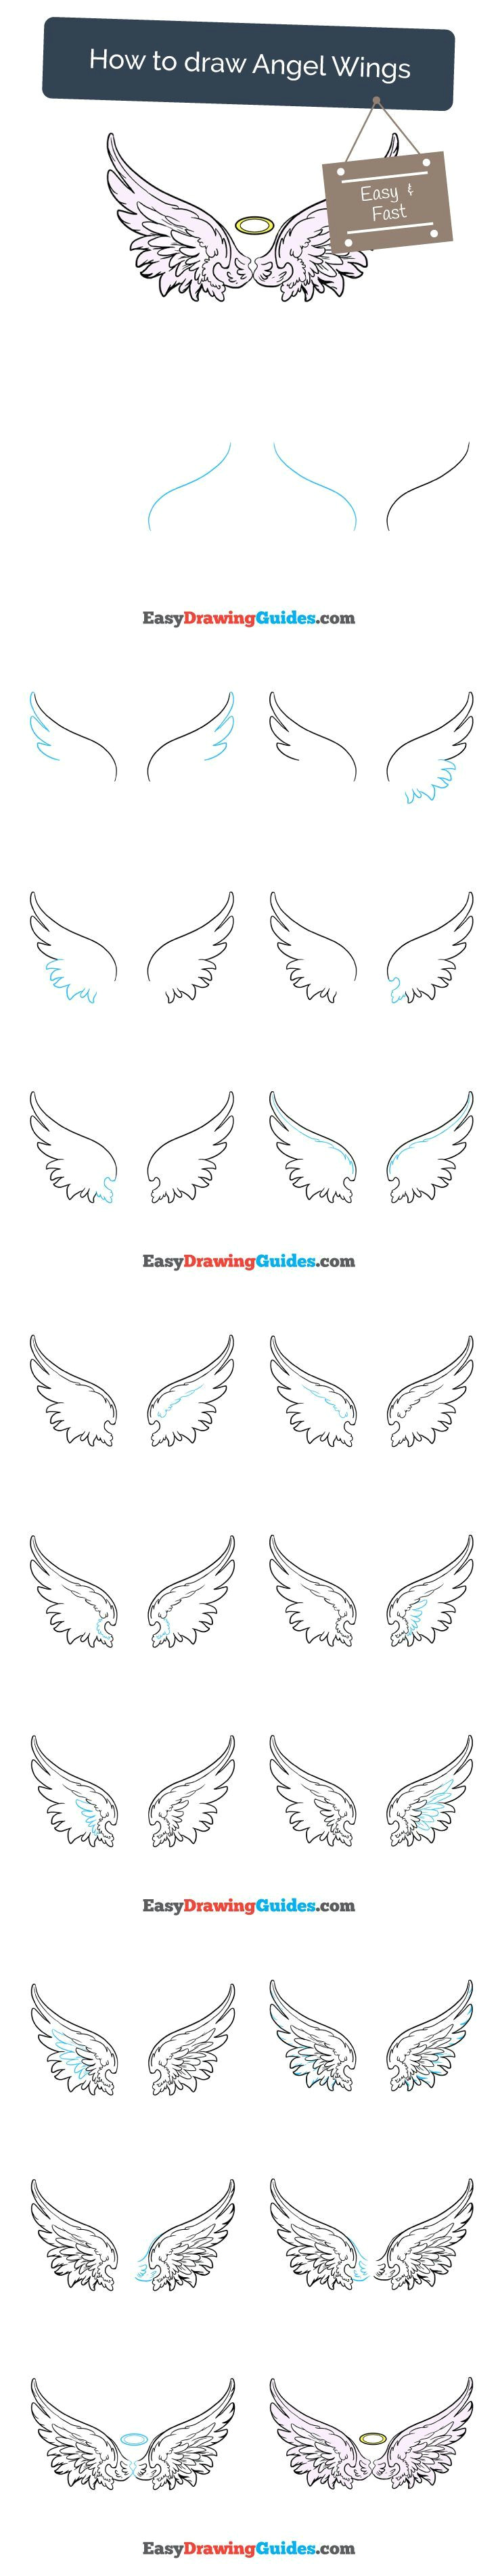 Drawing Easy Angel Wings How to Draw Angel Wings In A Few Easy Steps In 2018 Zeichnungen